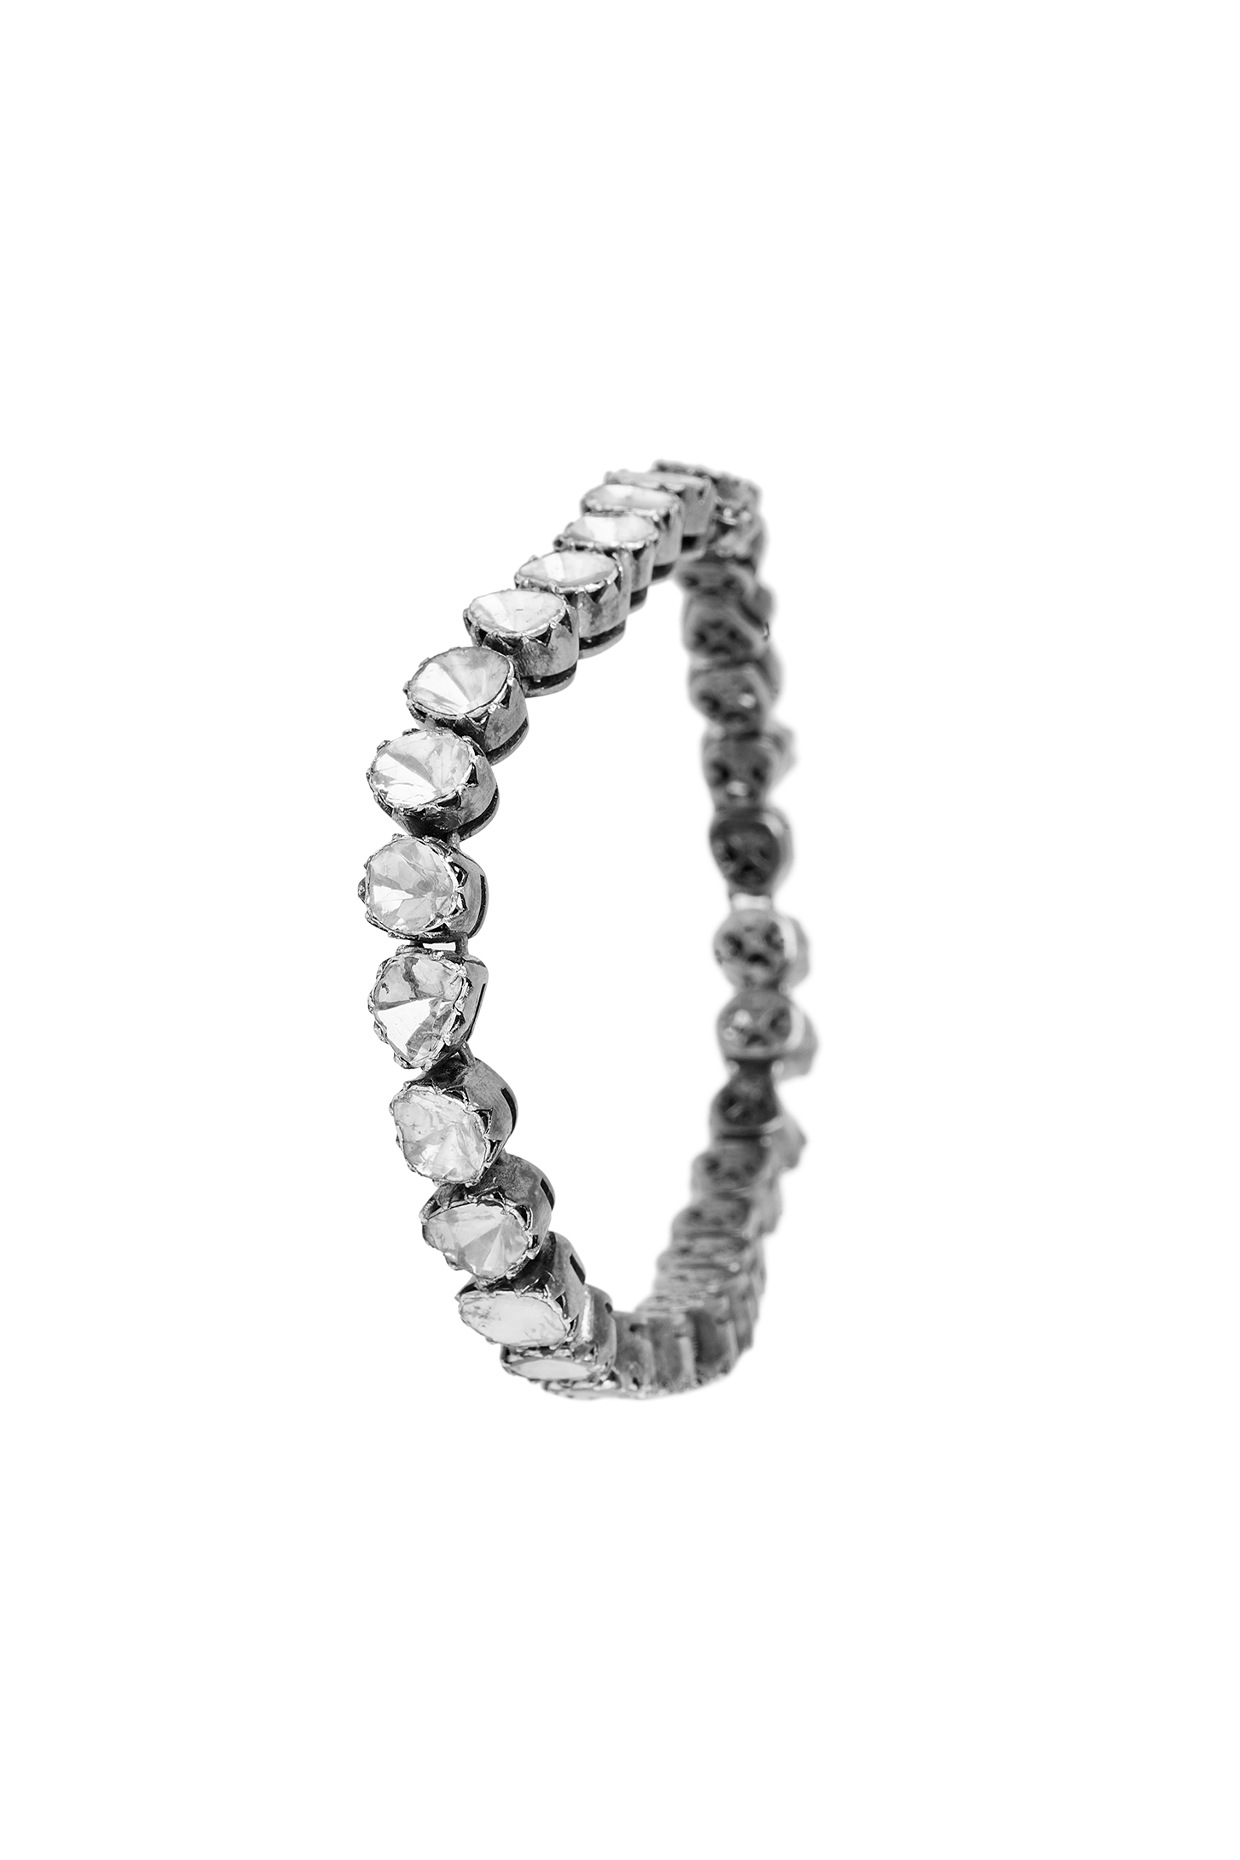 Buy Genuine Uncut Diamond Bangle Bracelet Jewelry Uncut Diamond Online in  India  Etsy